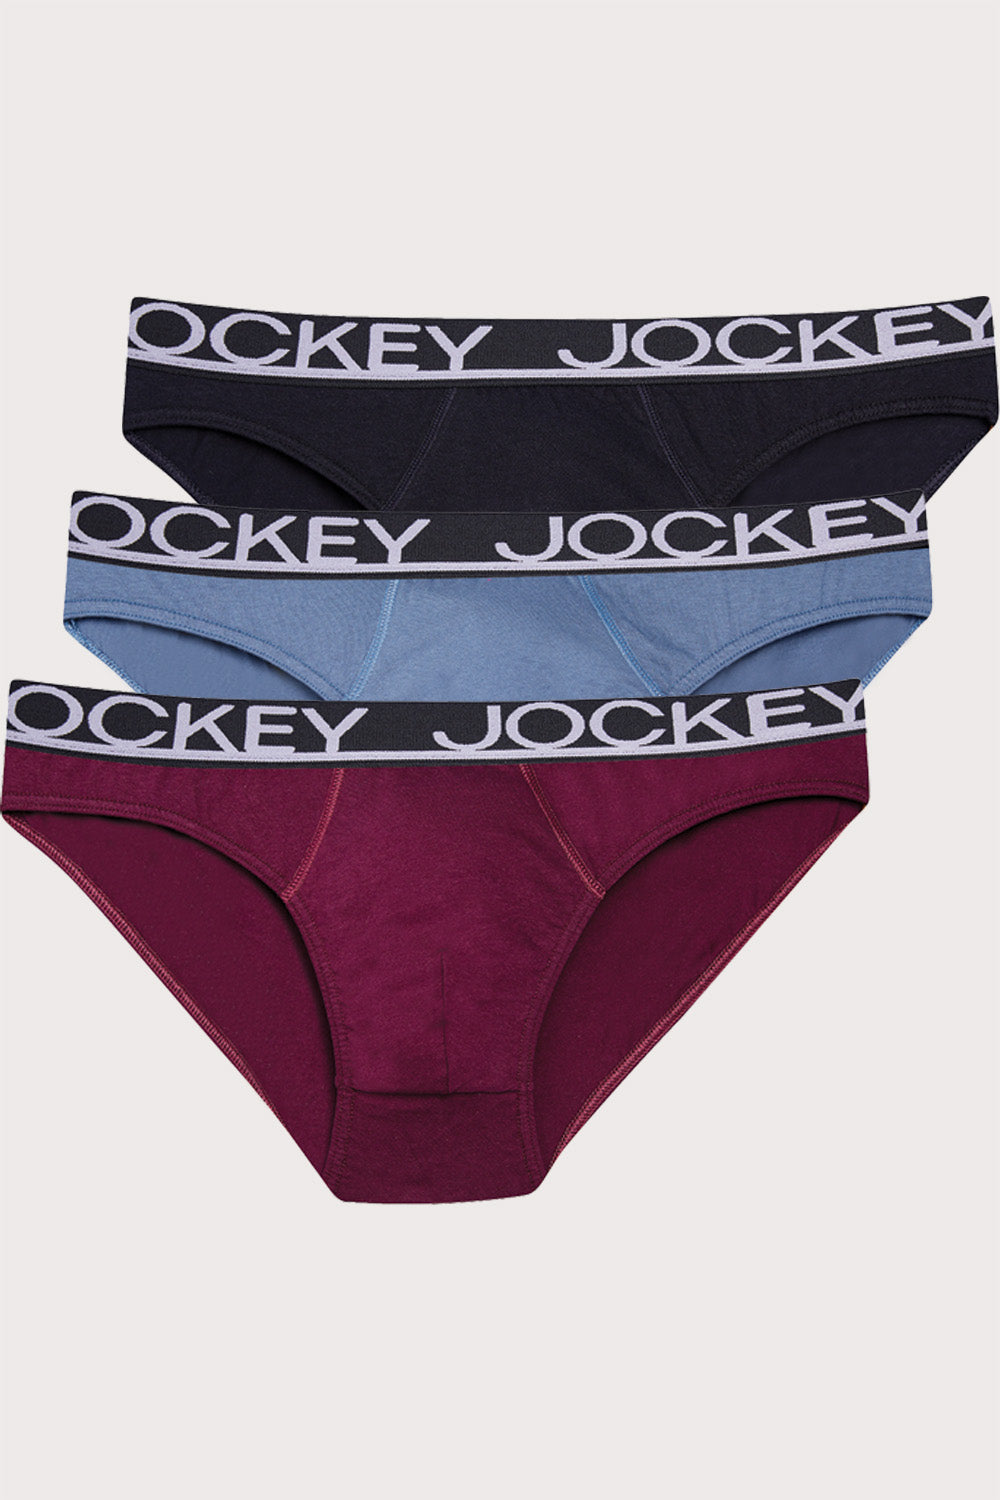 Jockey ® 3 Pack Briefs - S / PLAINS